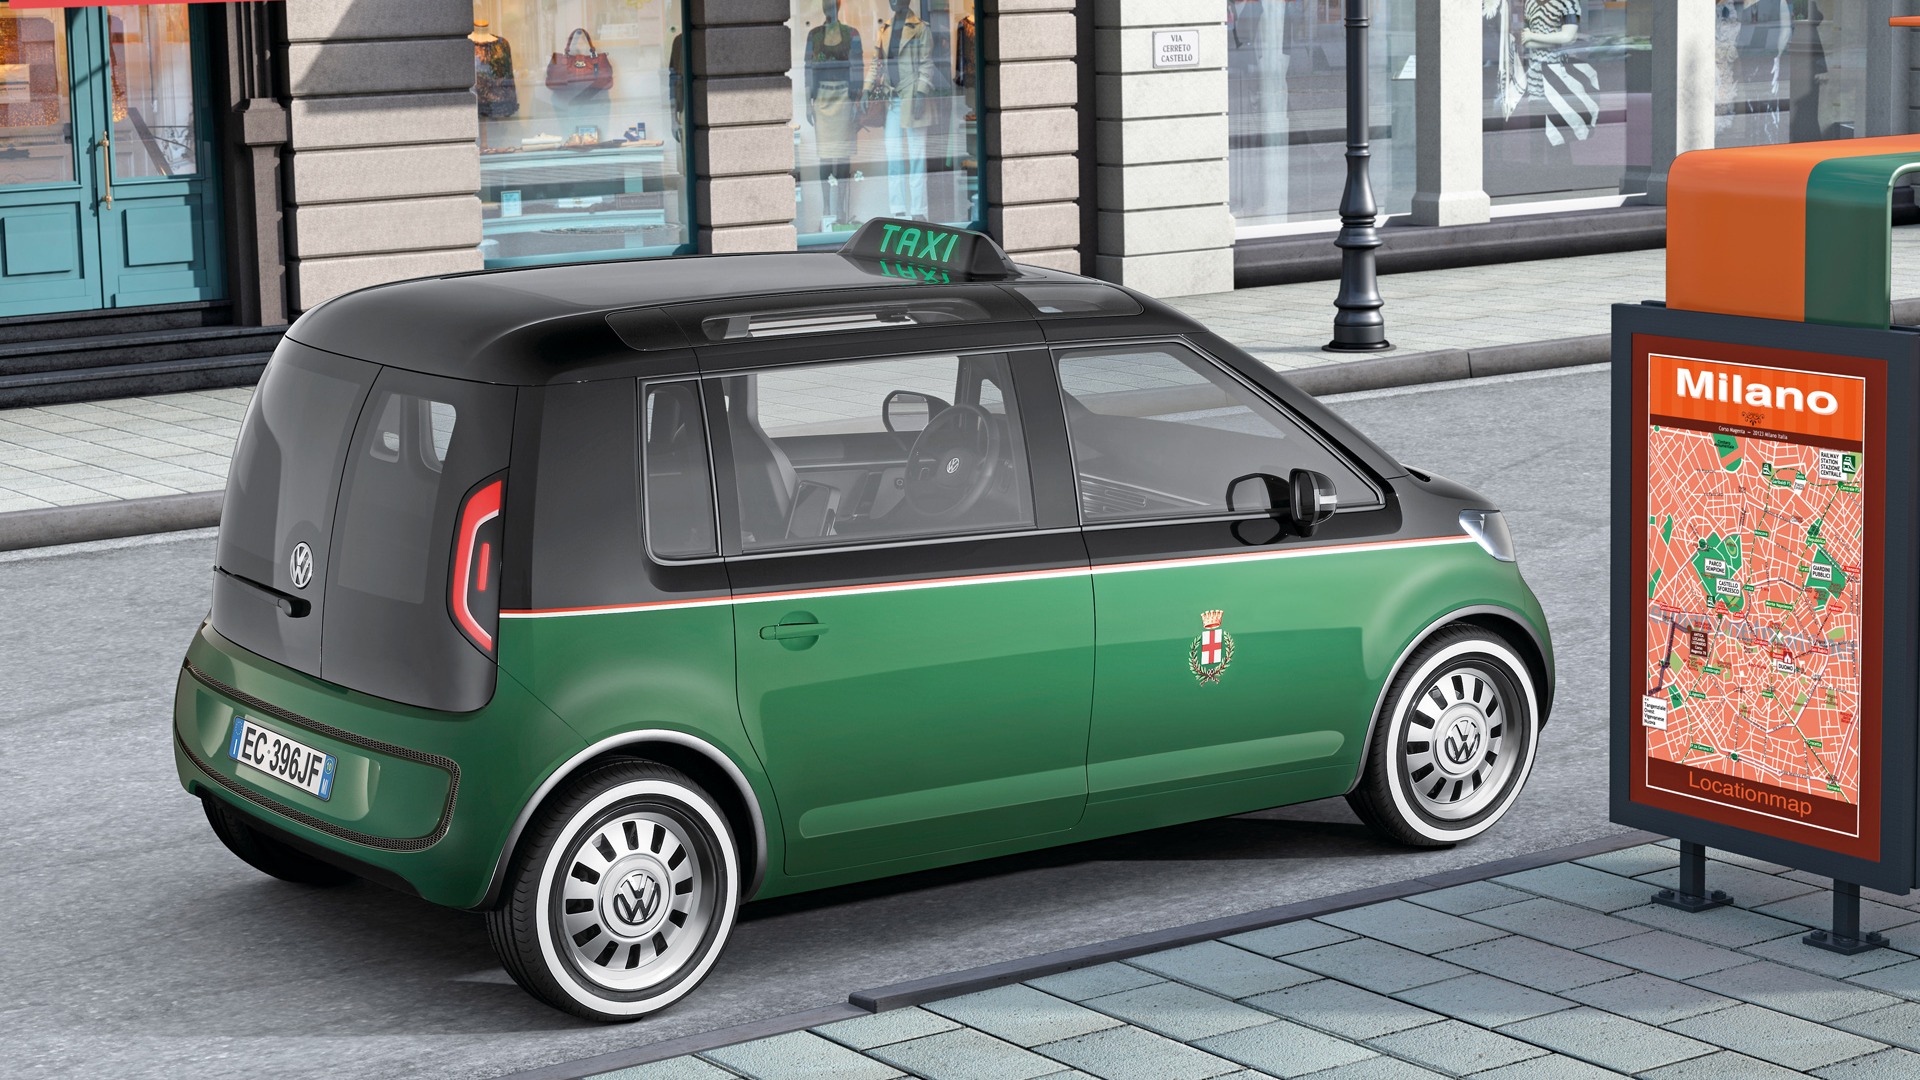 Concept Car Volkswagen Milano Taxi - 2010 大众5 - 1920x1080